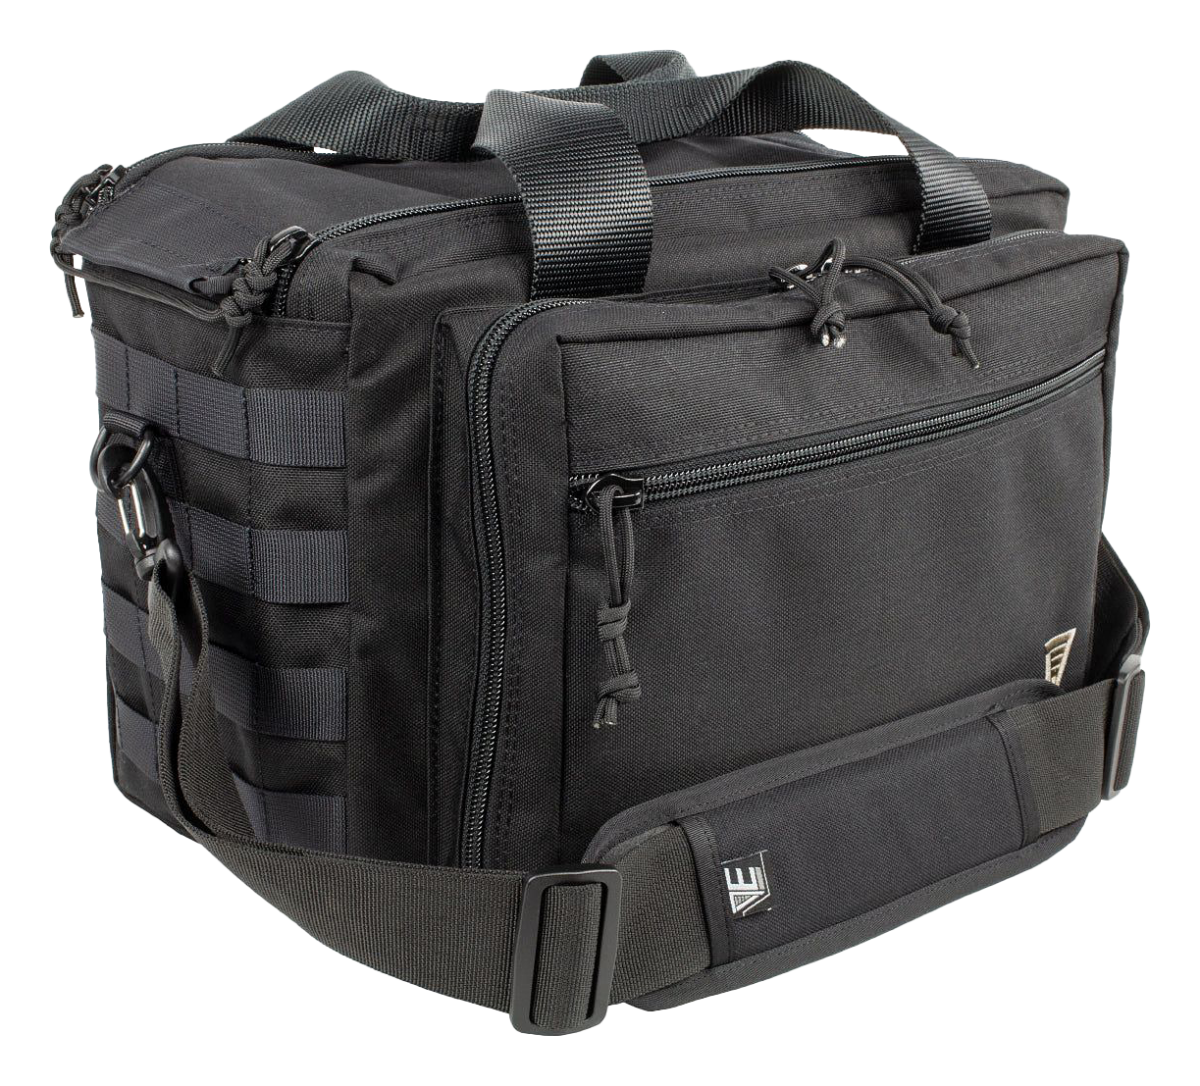 Elite Survival Systems Elite Range Bag - Small